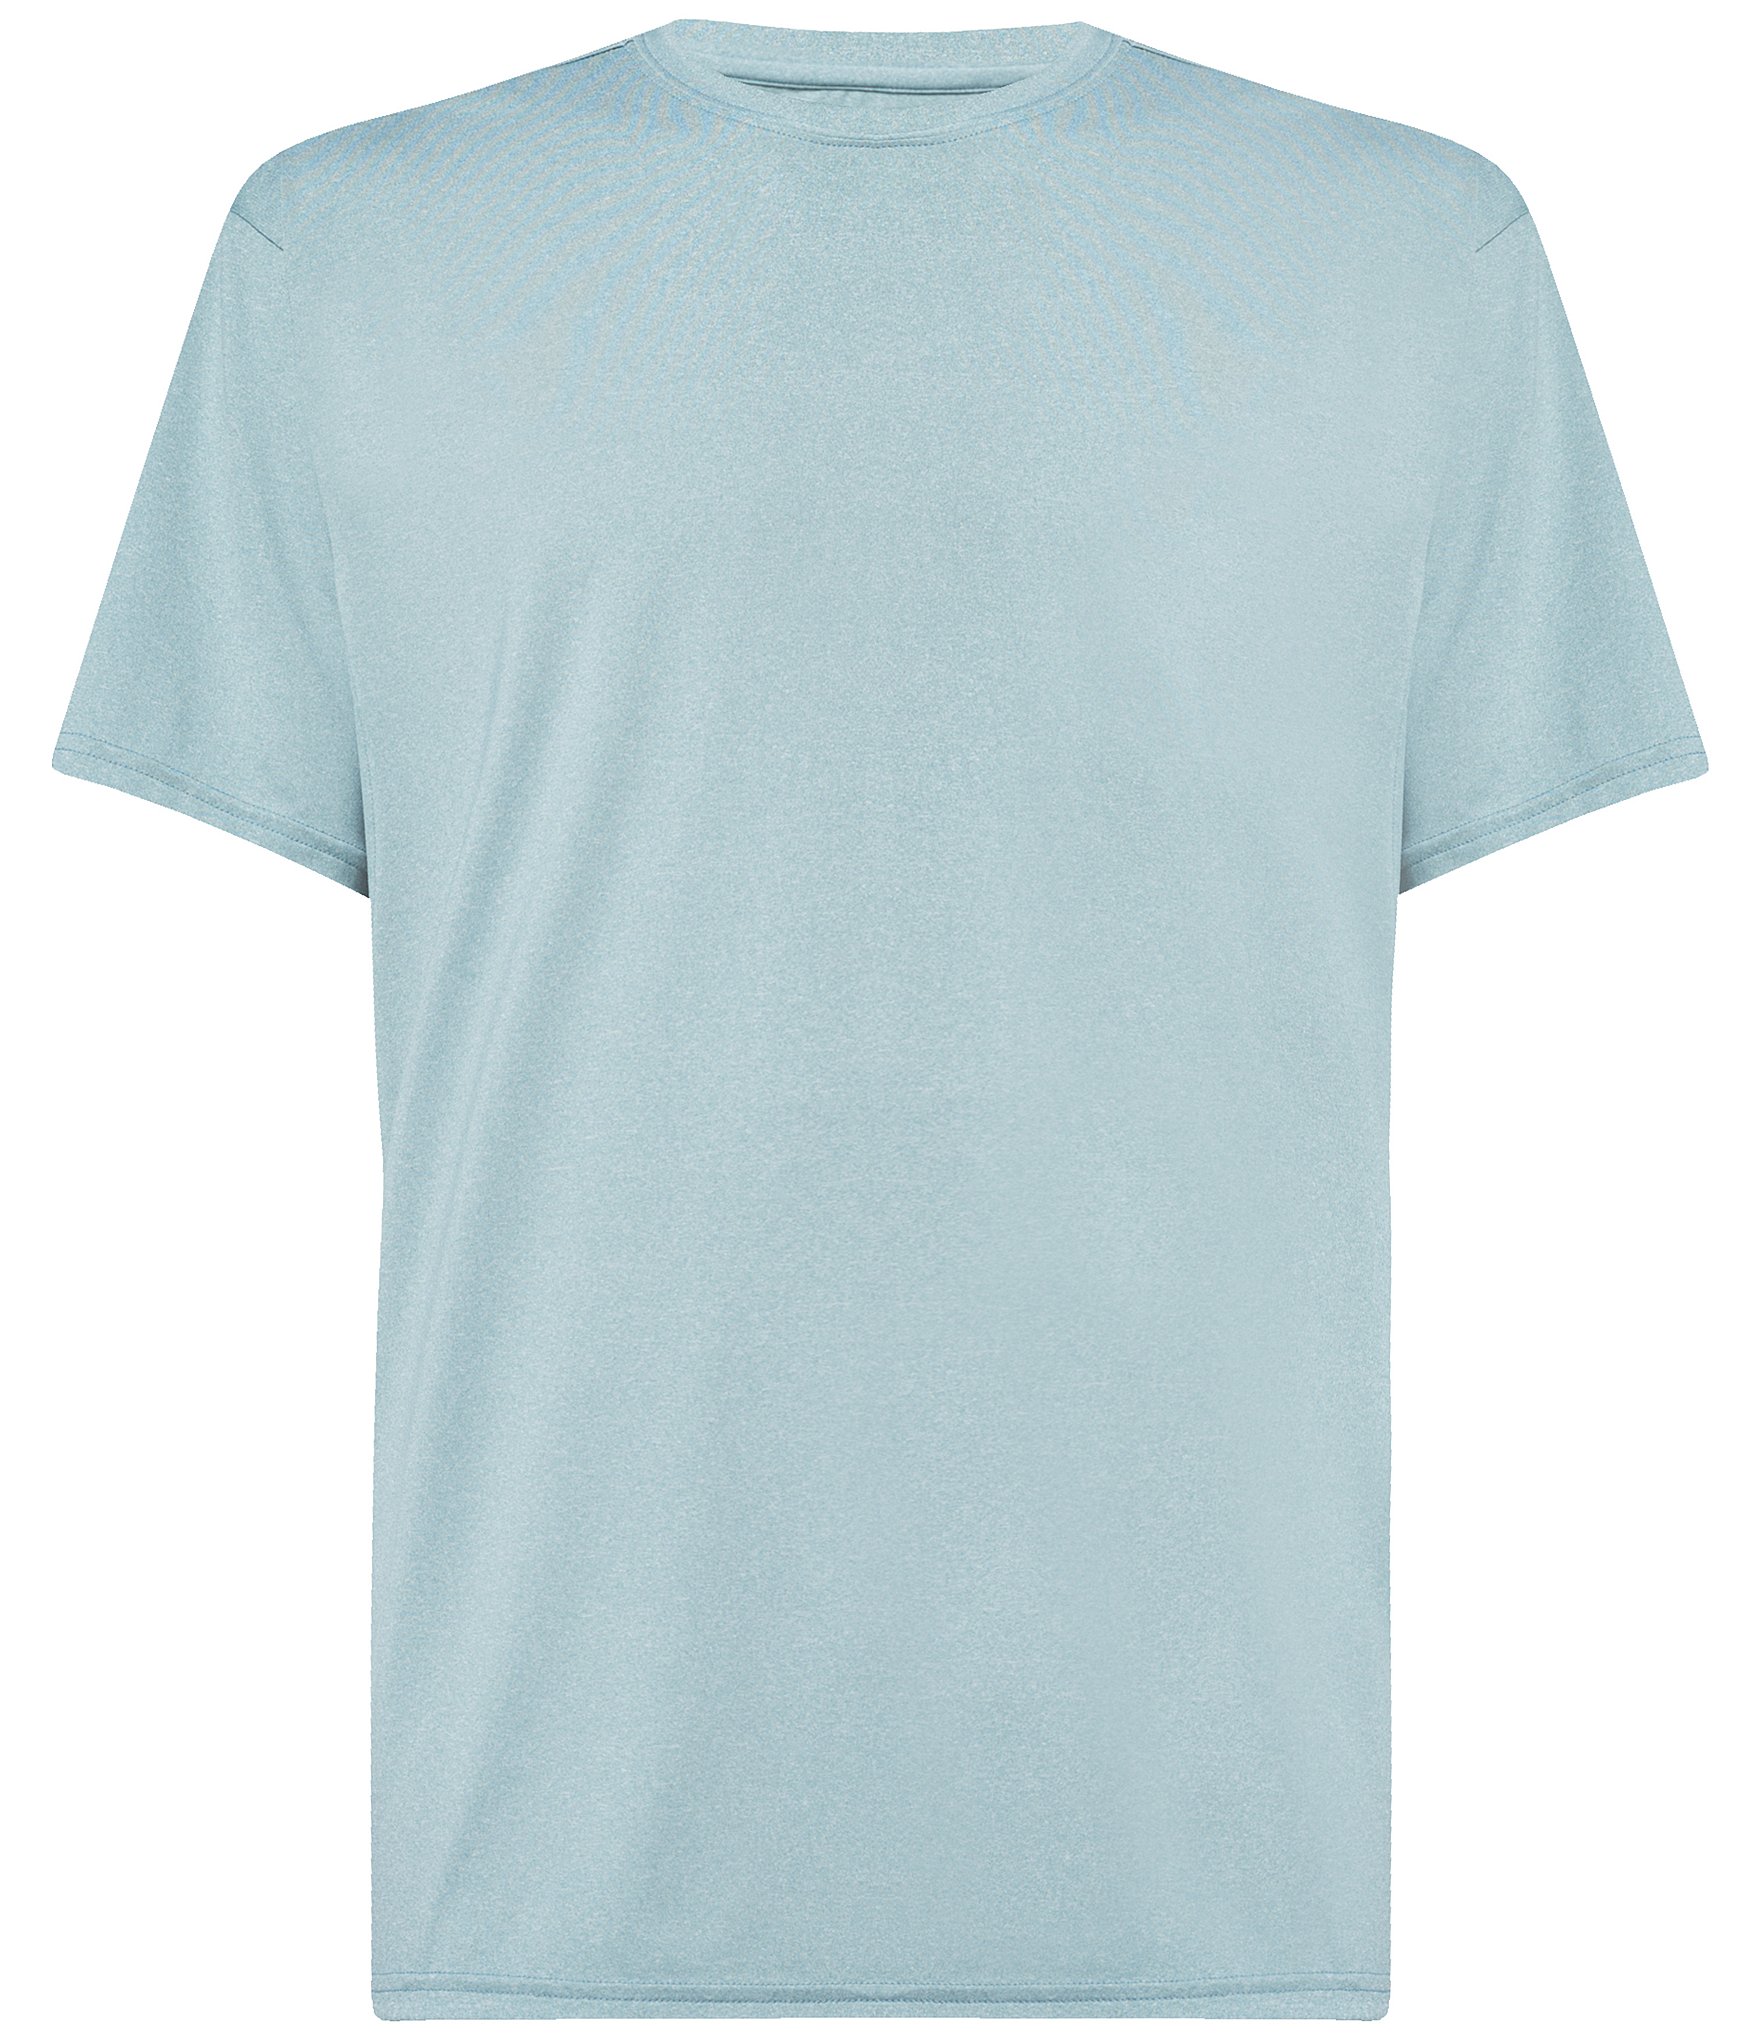 Costa Voyage Performance Tech Short-Sleeve Shirt | Dillard's